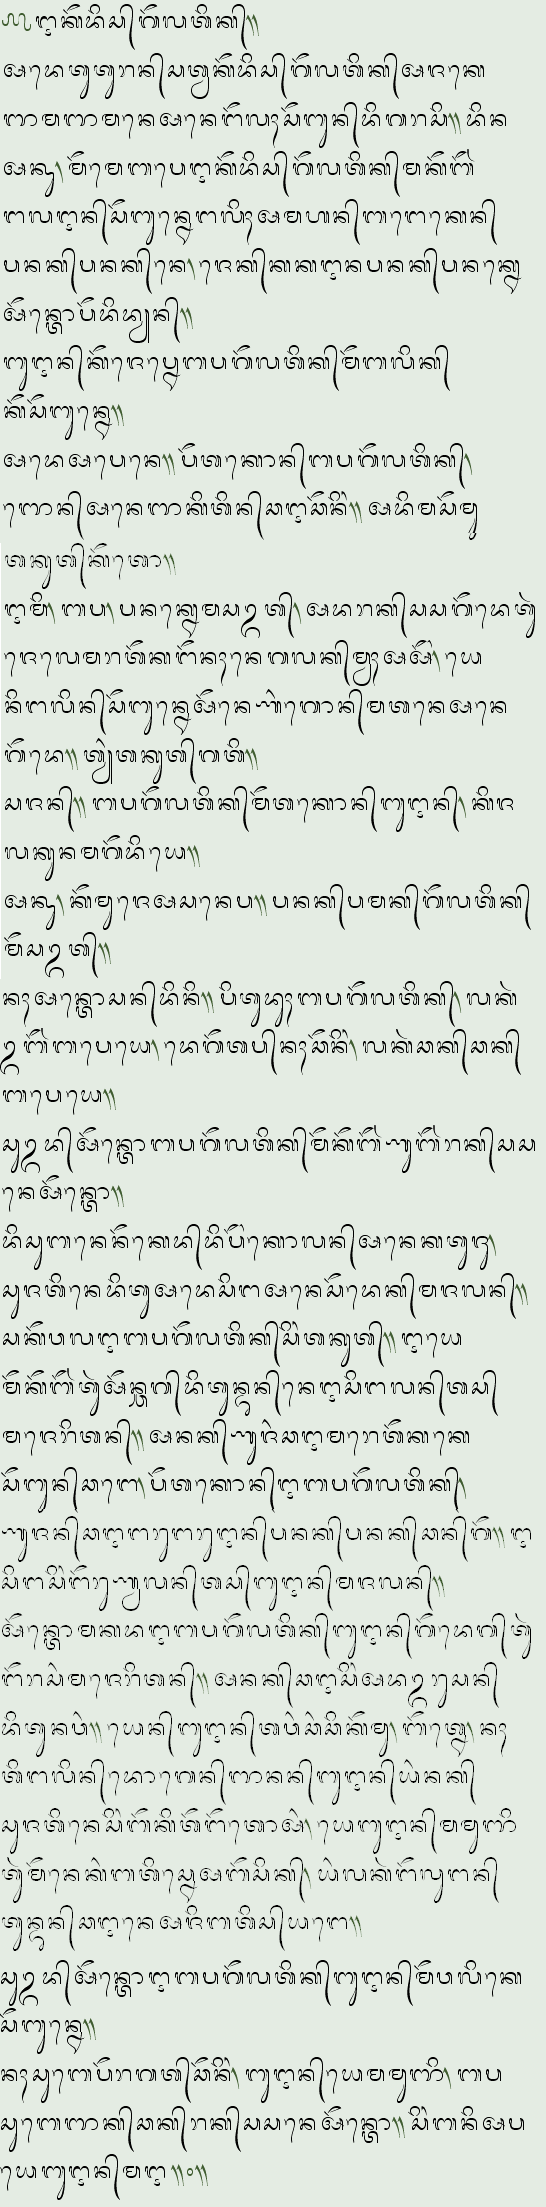 Balinese script version